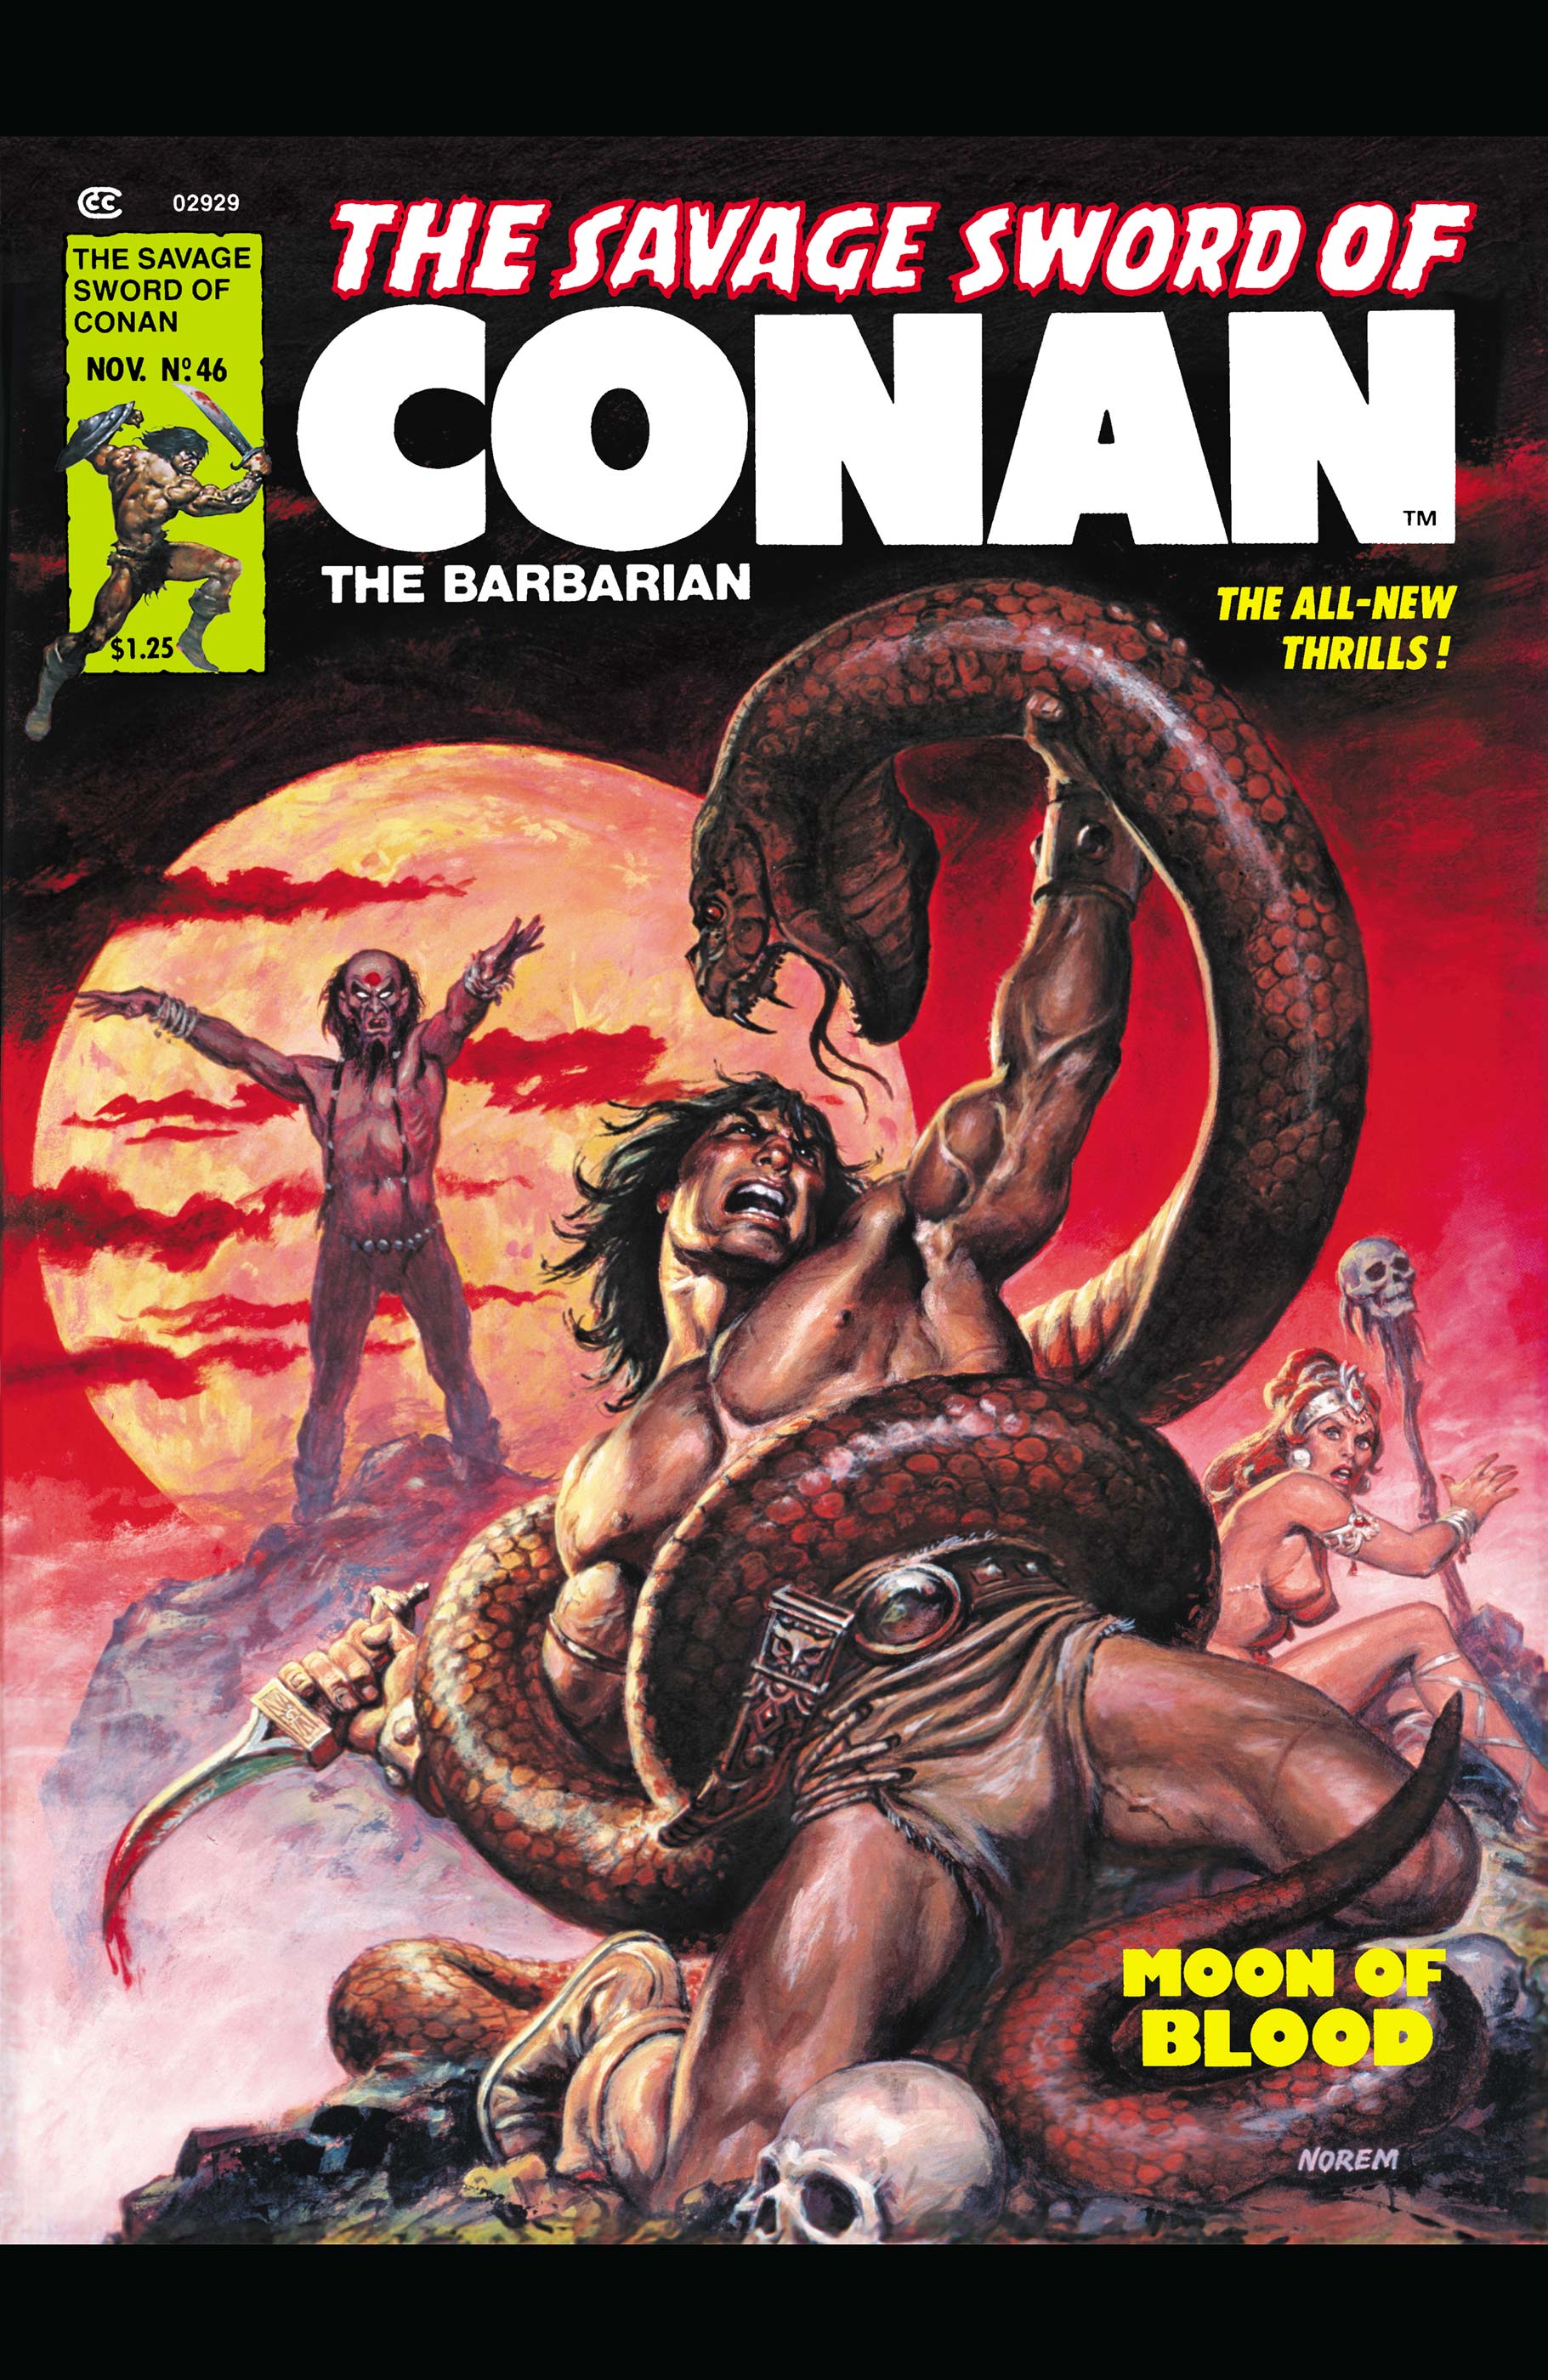 The Savage Sword of Conan (1974) #46